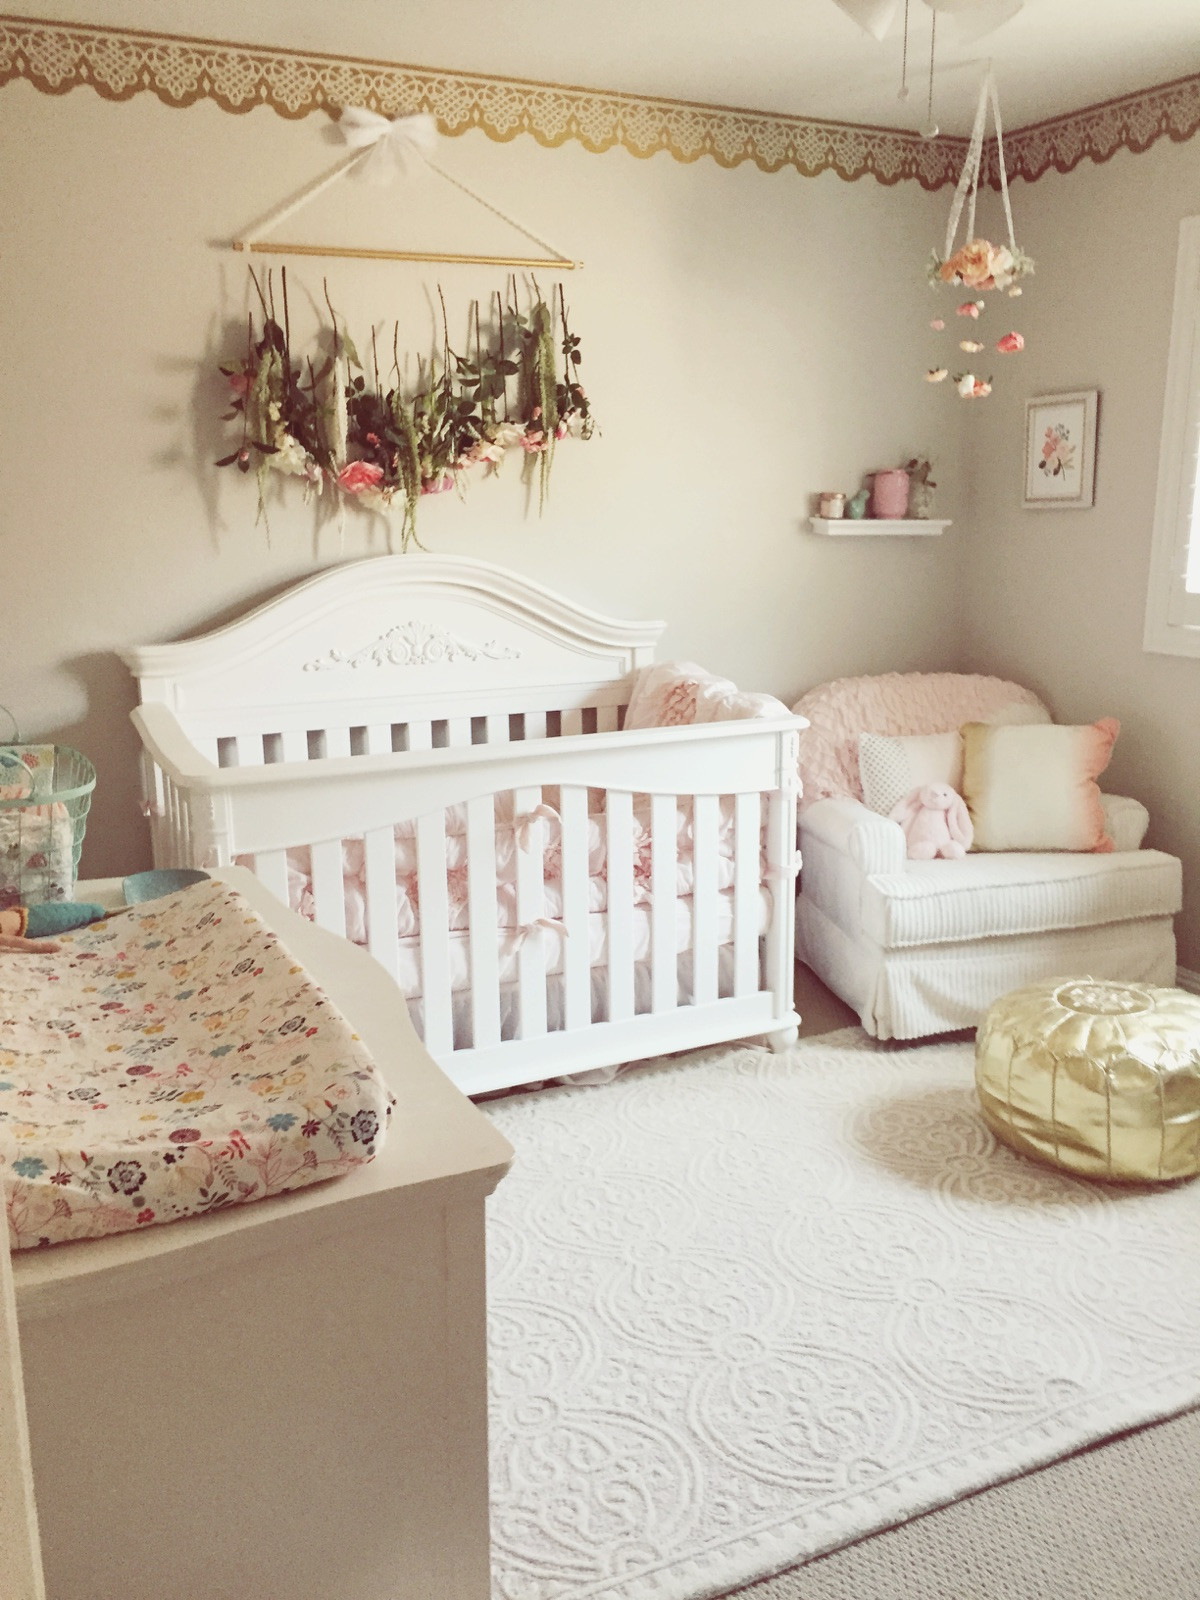 D.I.Y Baby Girl Room Decorations
 TESSA RAYANNE Layla Sienna s Nursery Tour